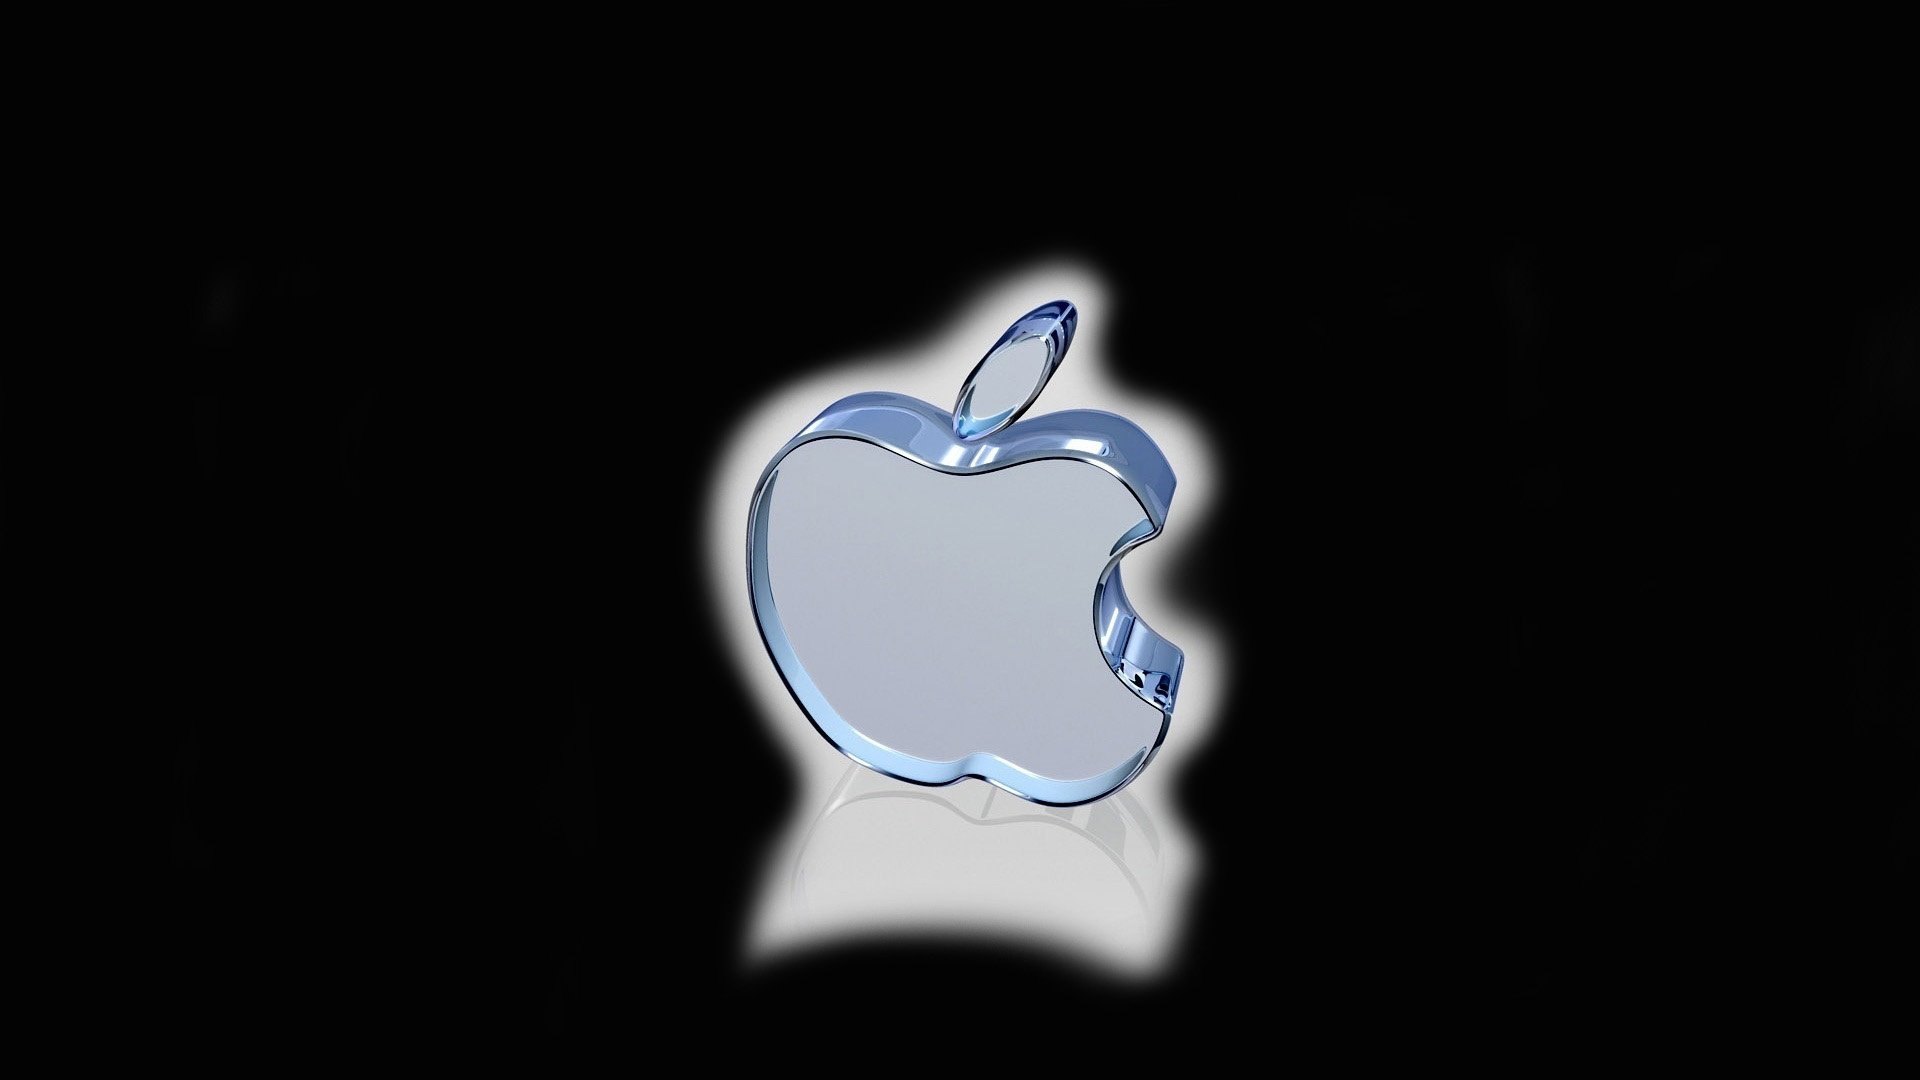 Обои на айфон без. Логотип Apple. Обои Apple. Яблоко айфон. Iphone логотип.